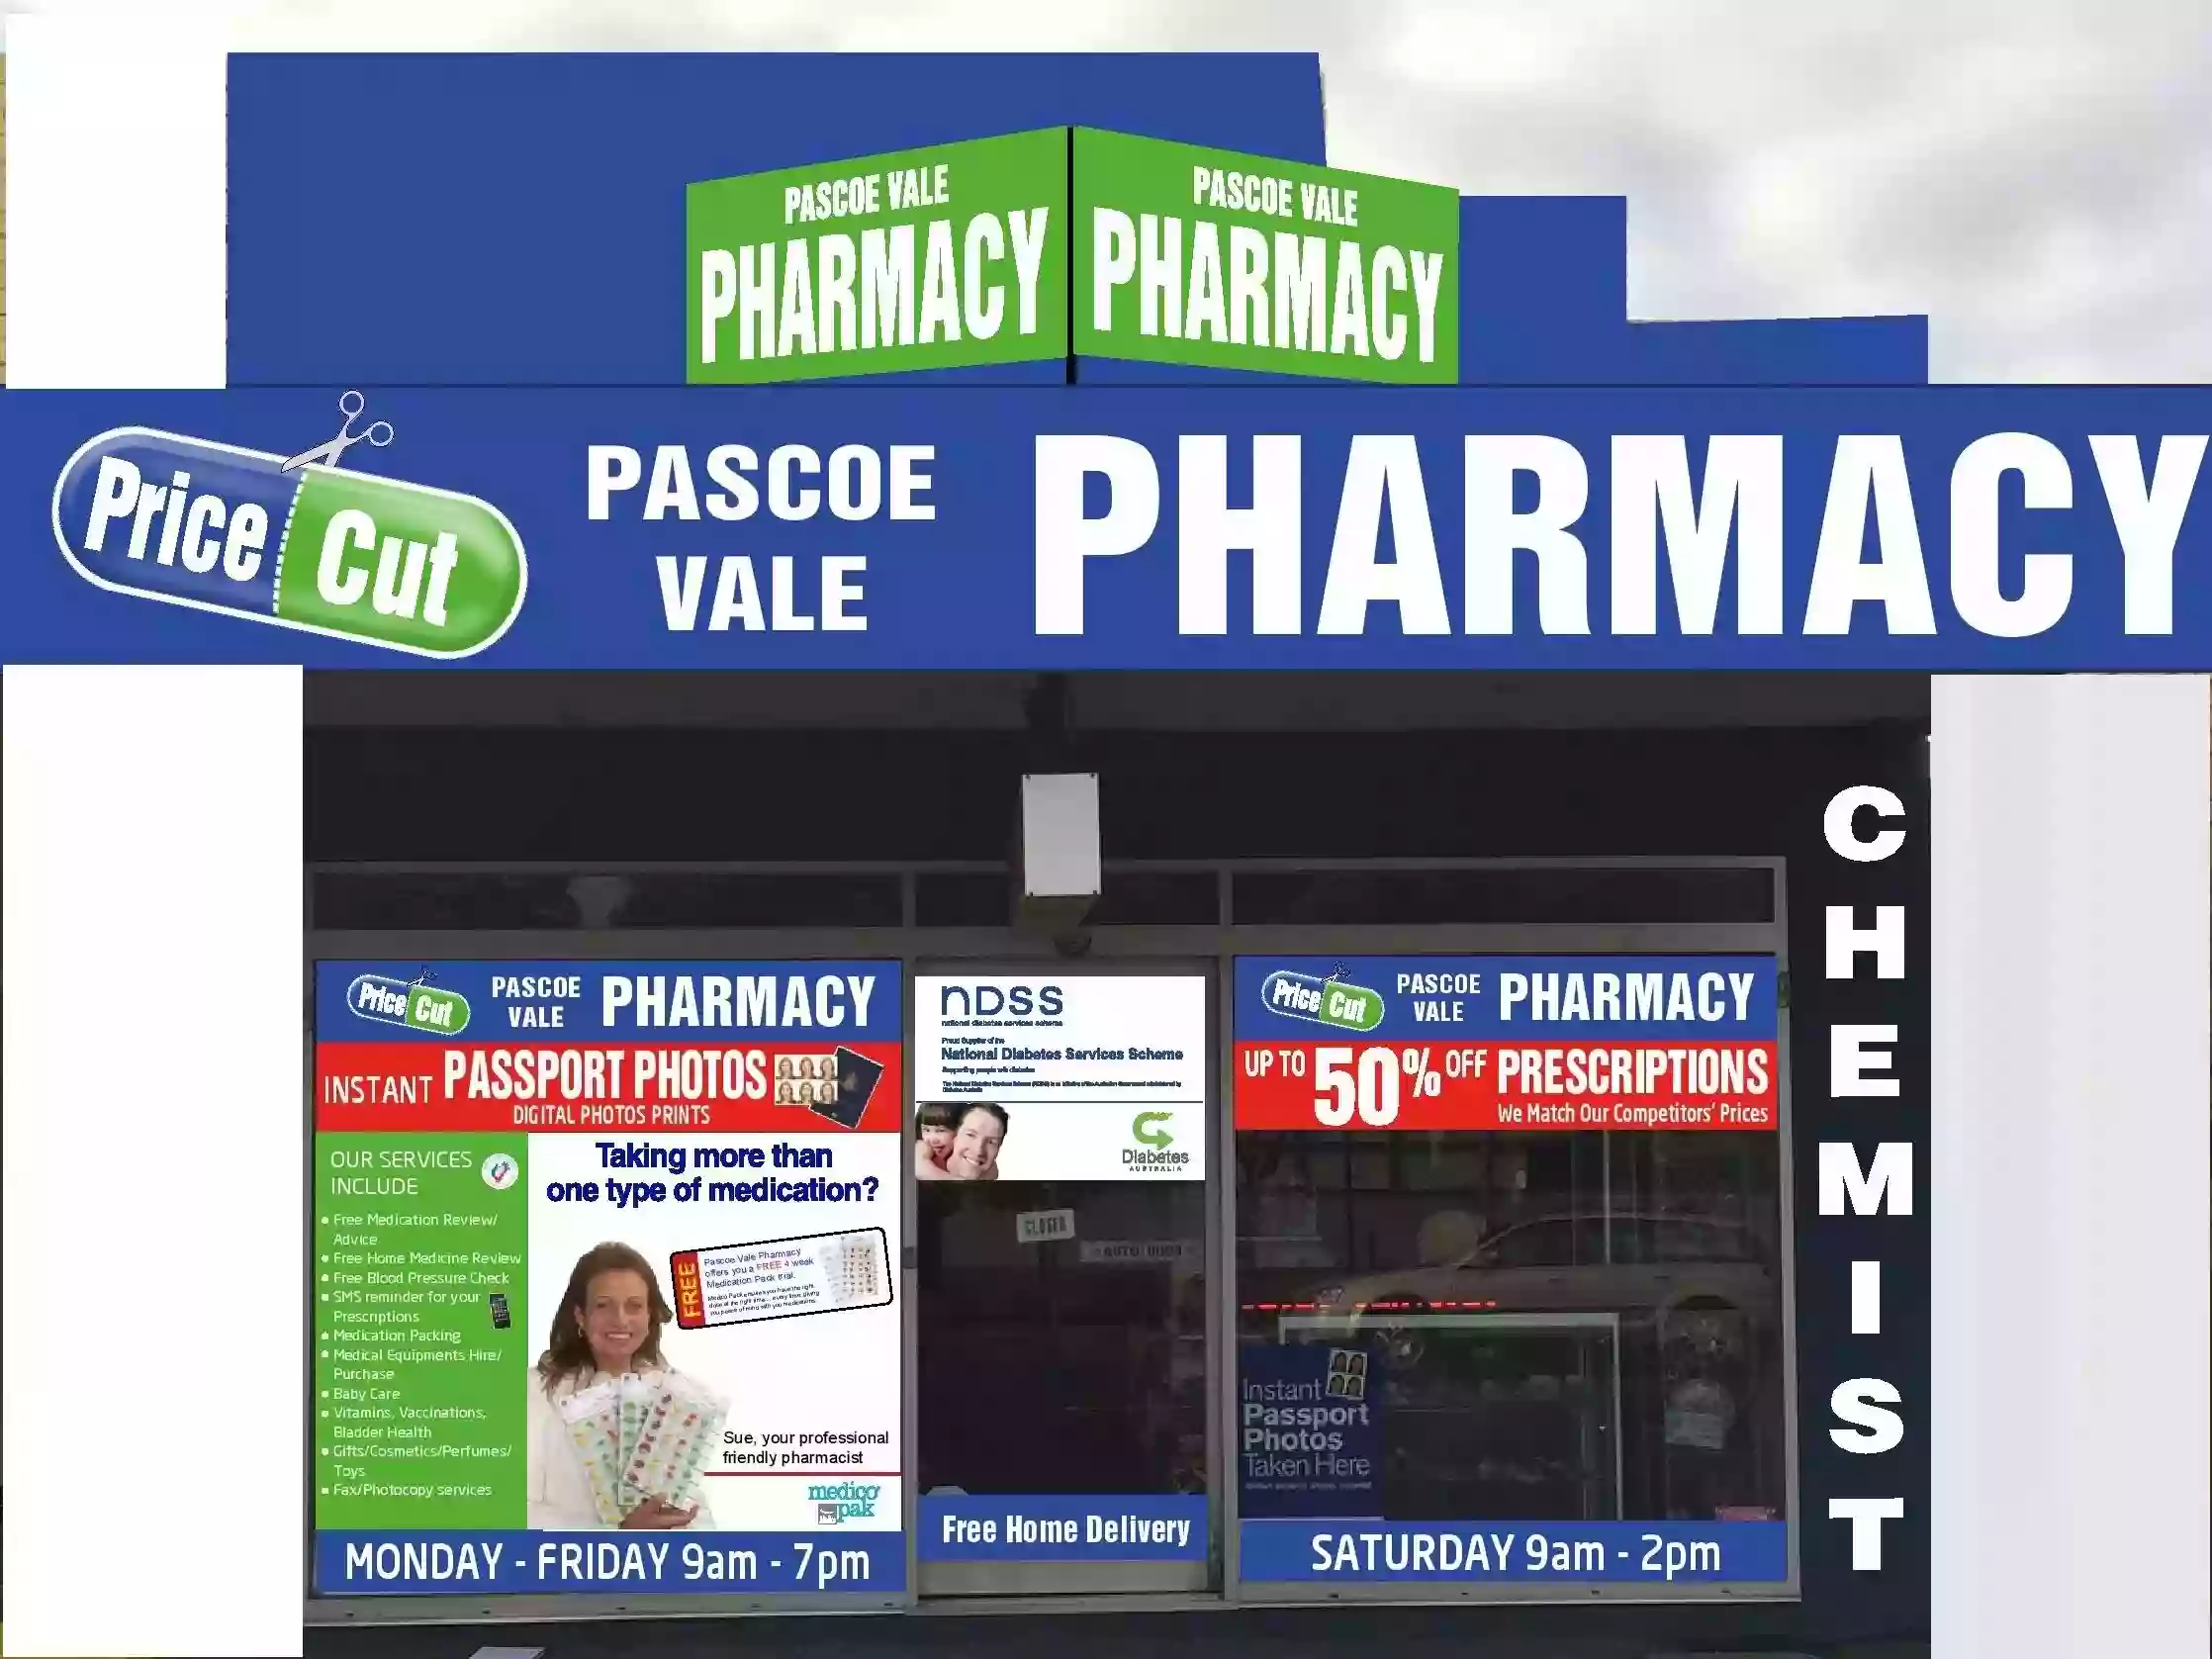 Pascoe Vale Pharmacy